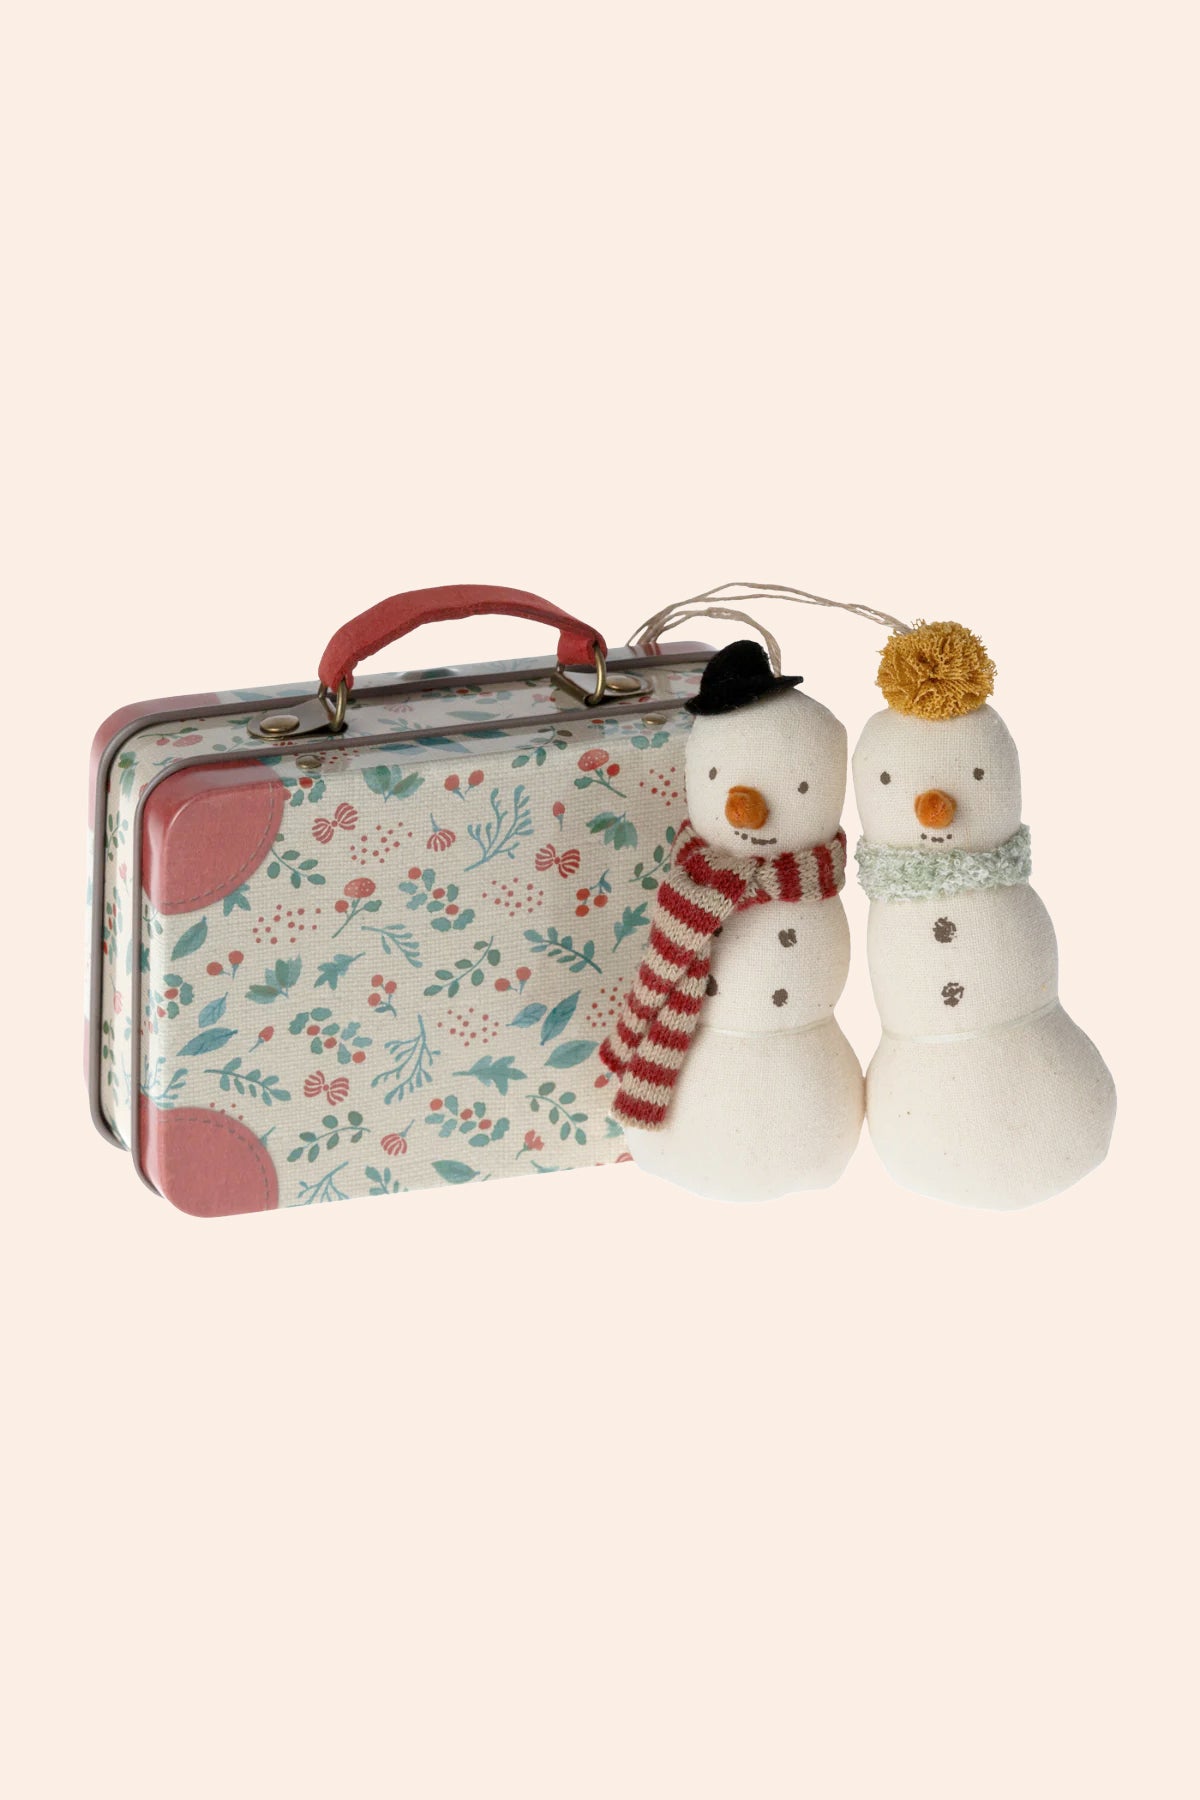 Maileg - Snowman Ornament, 2 pcs in Metal Suitcase